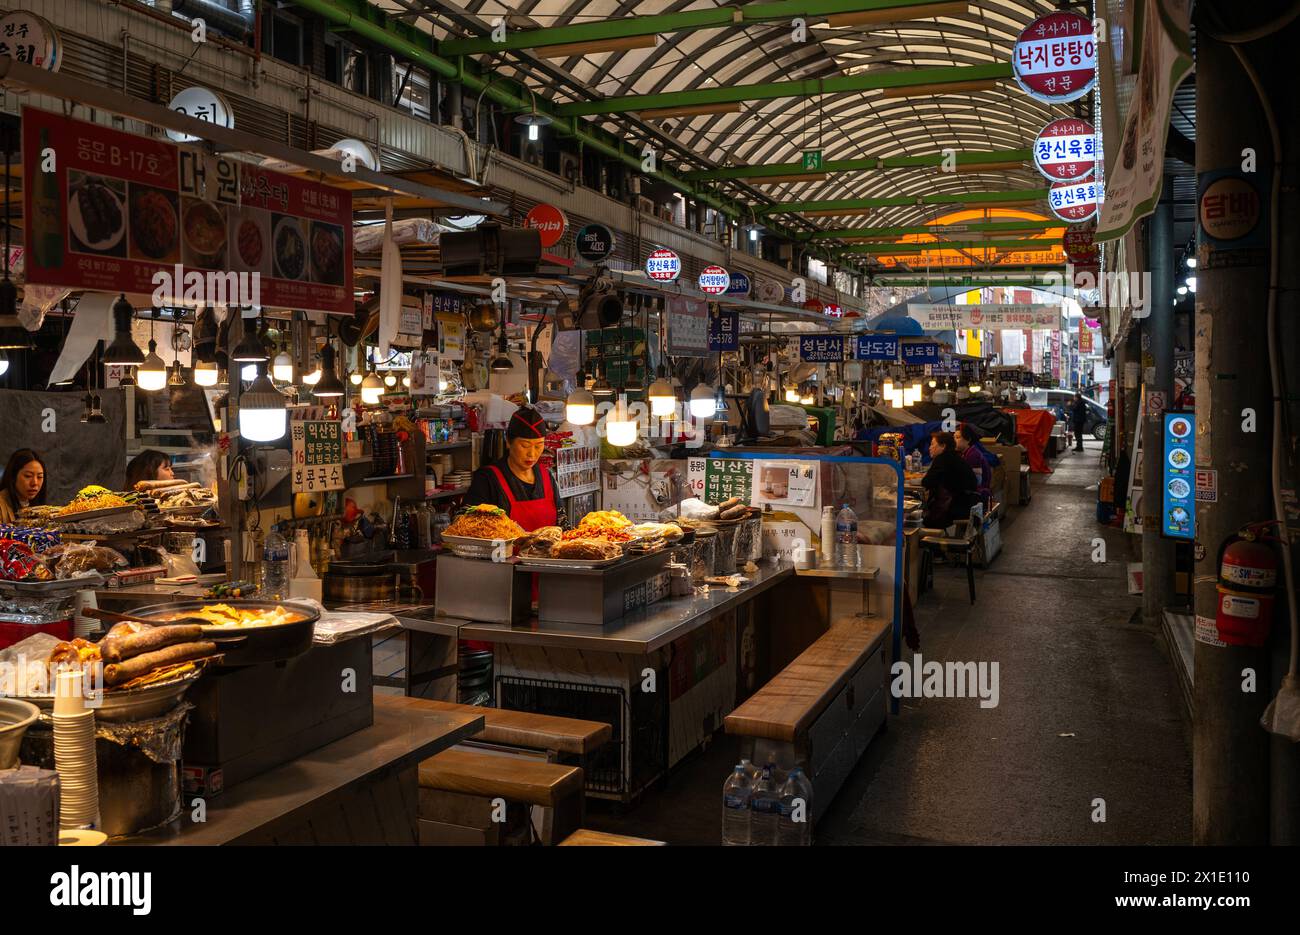 Streetfood vendor selling Korean food in Gwangjang market Seoul, Korea Stock Photo